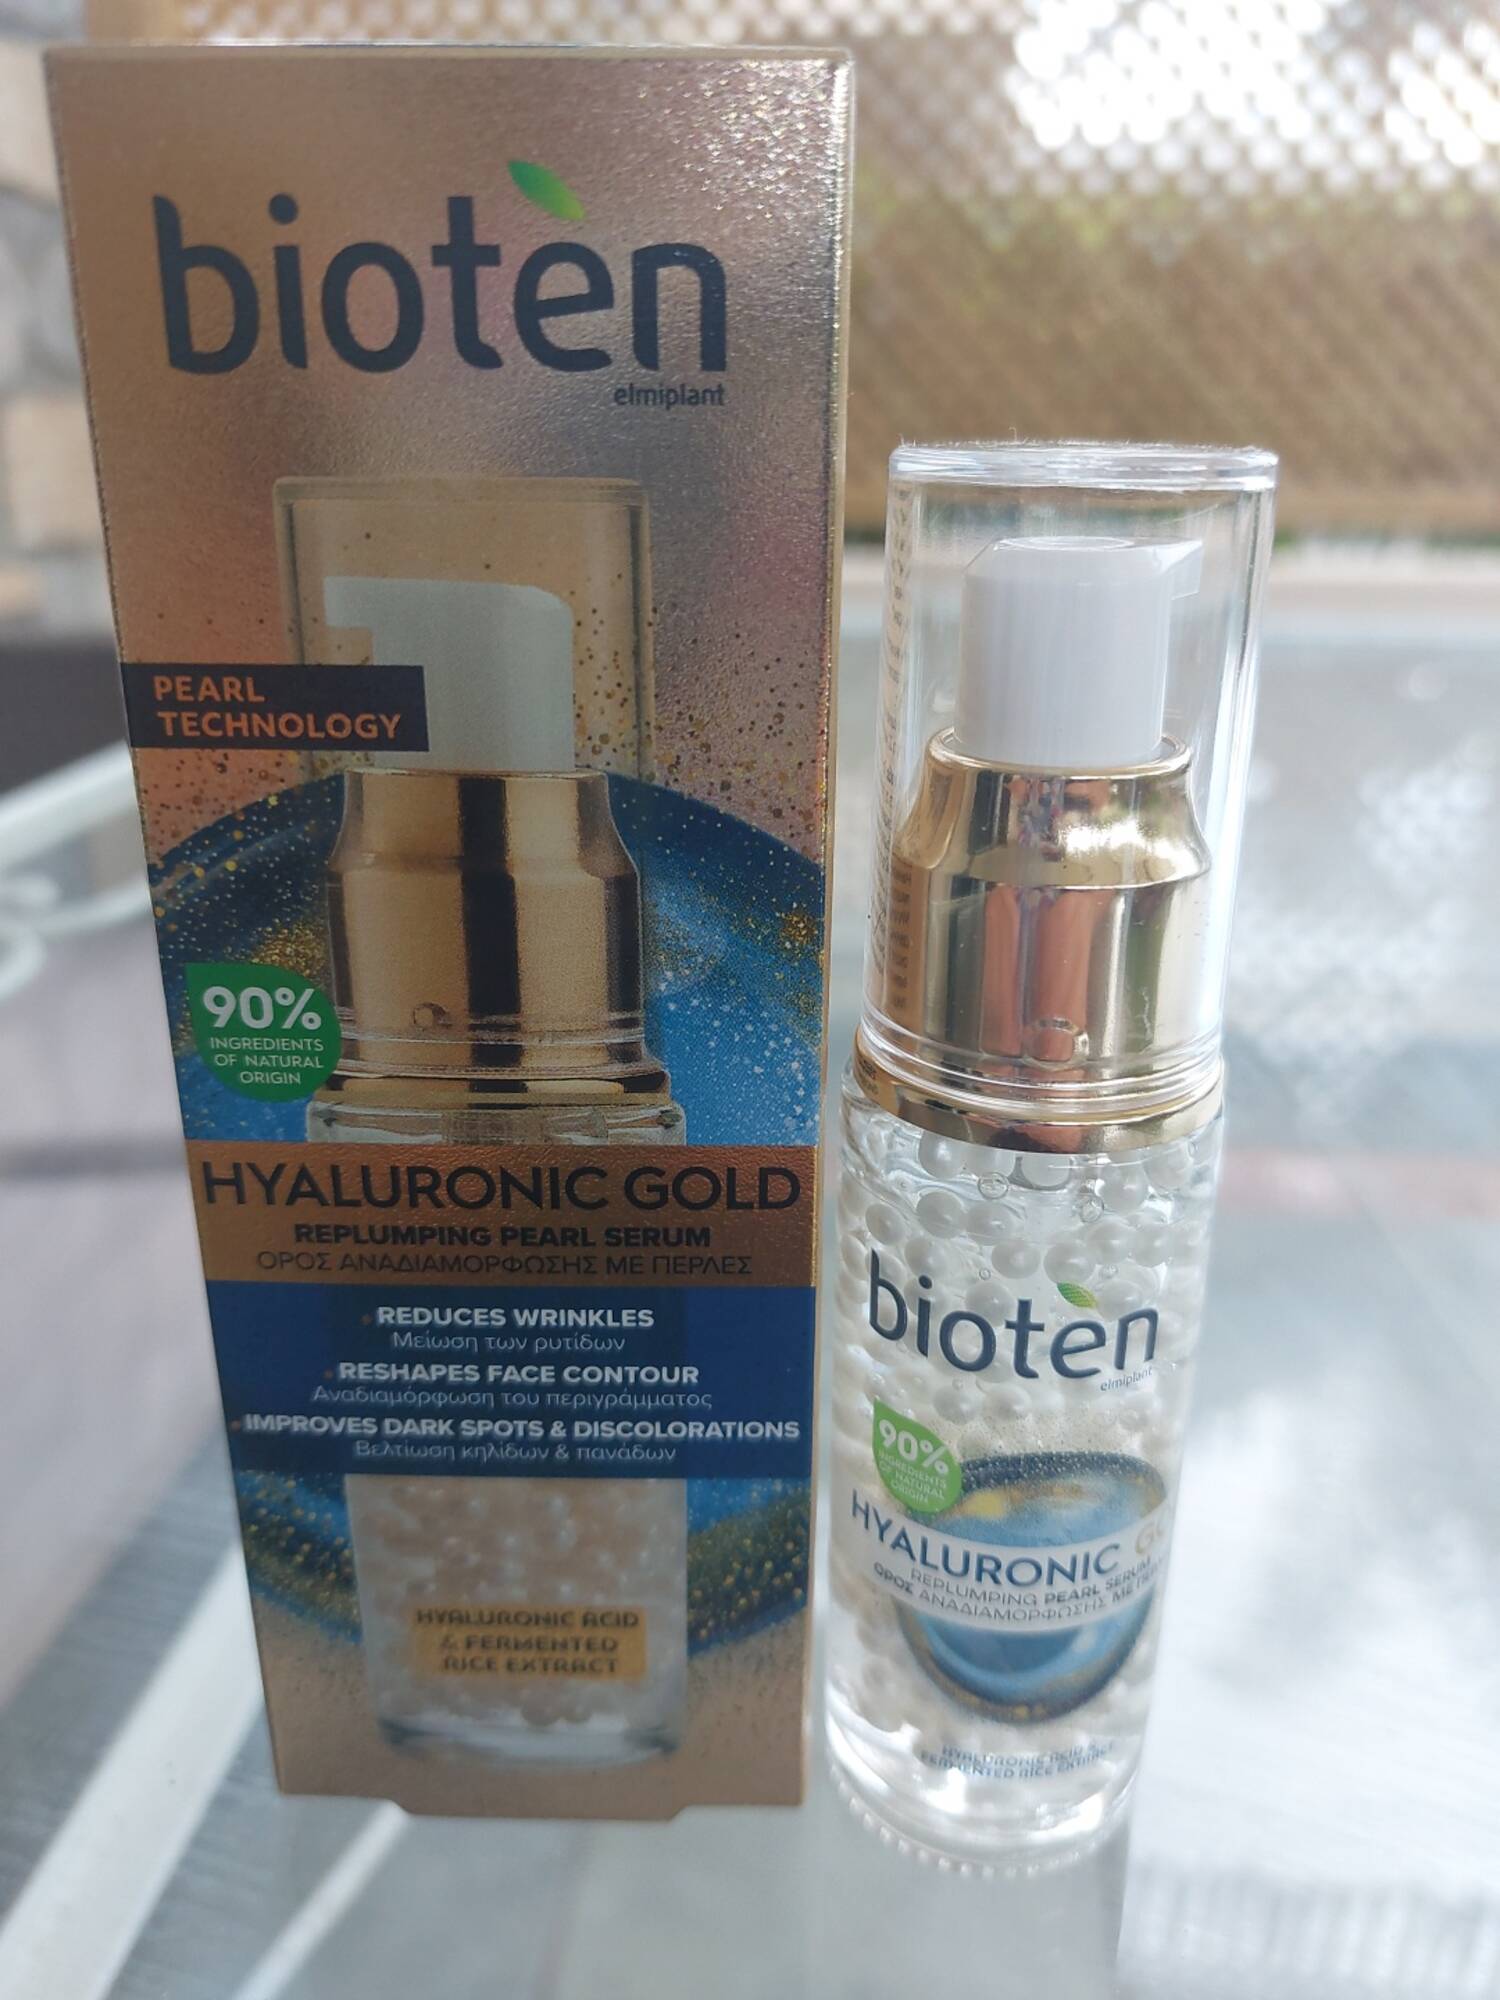 BIOTEN - Hyaluronic Gold - Replumping perrl serum